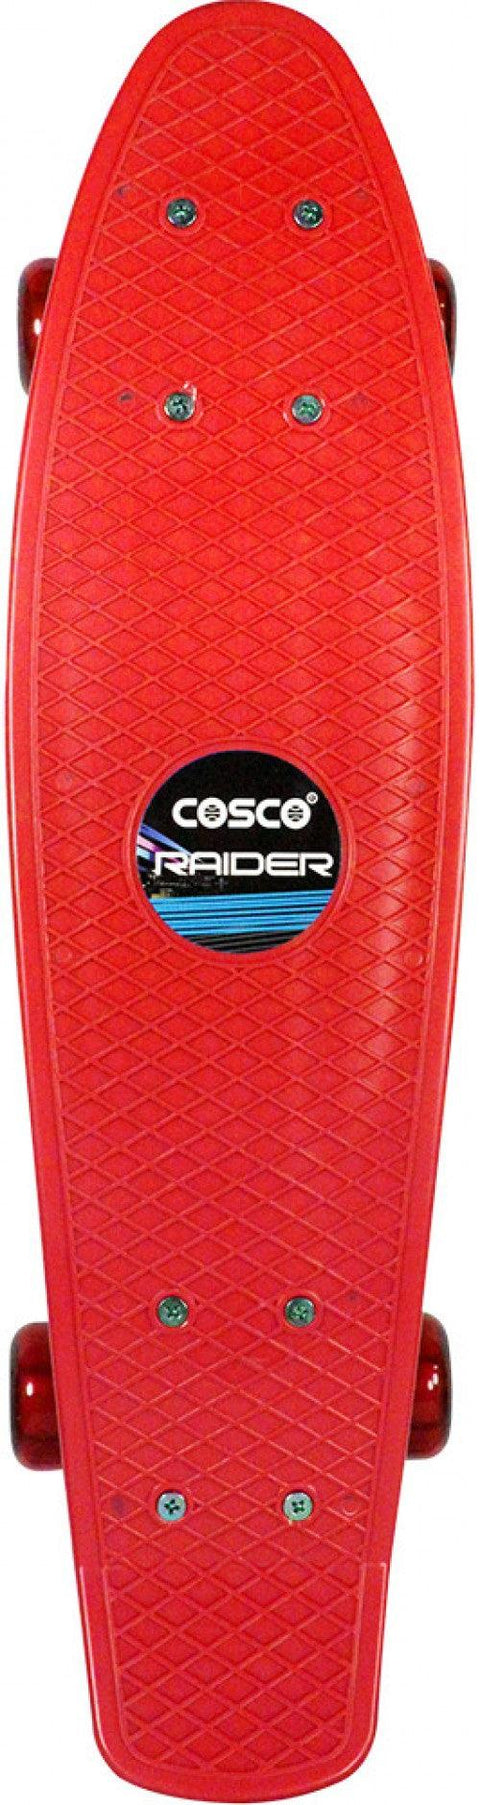 Cosco Raider Jr. Skate Board